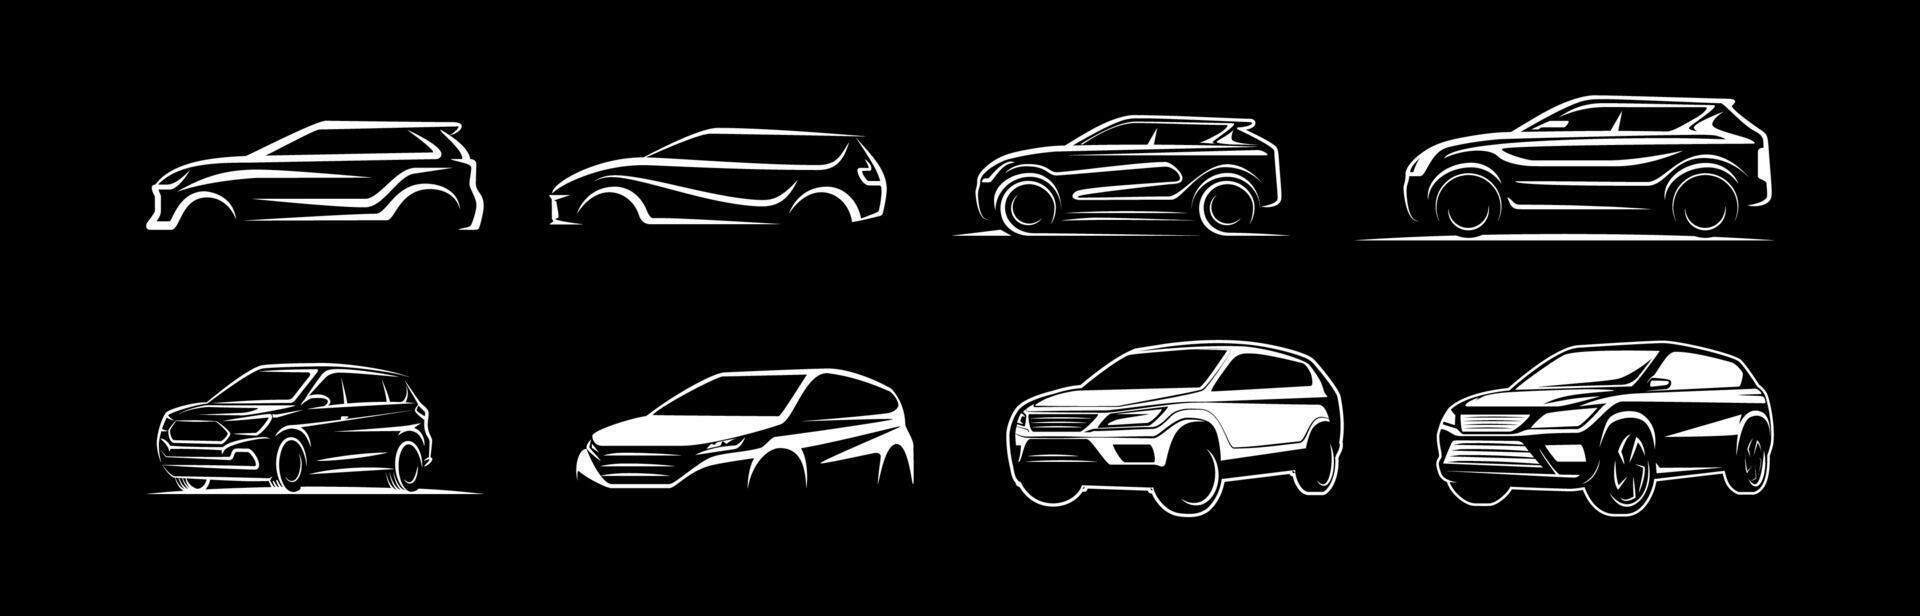 Set of crossover SUV car service logo set for automotive repair, service, rental, sales business vector templates.